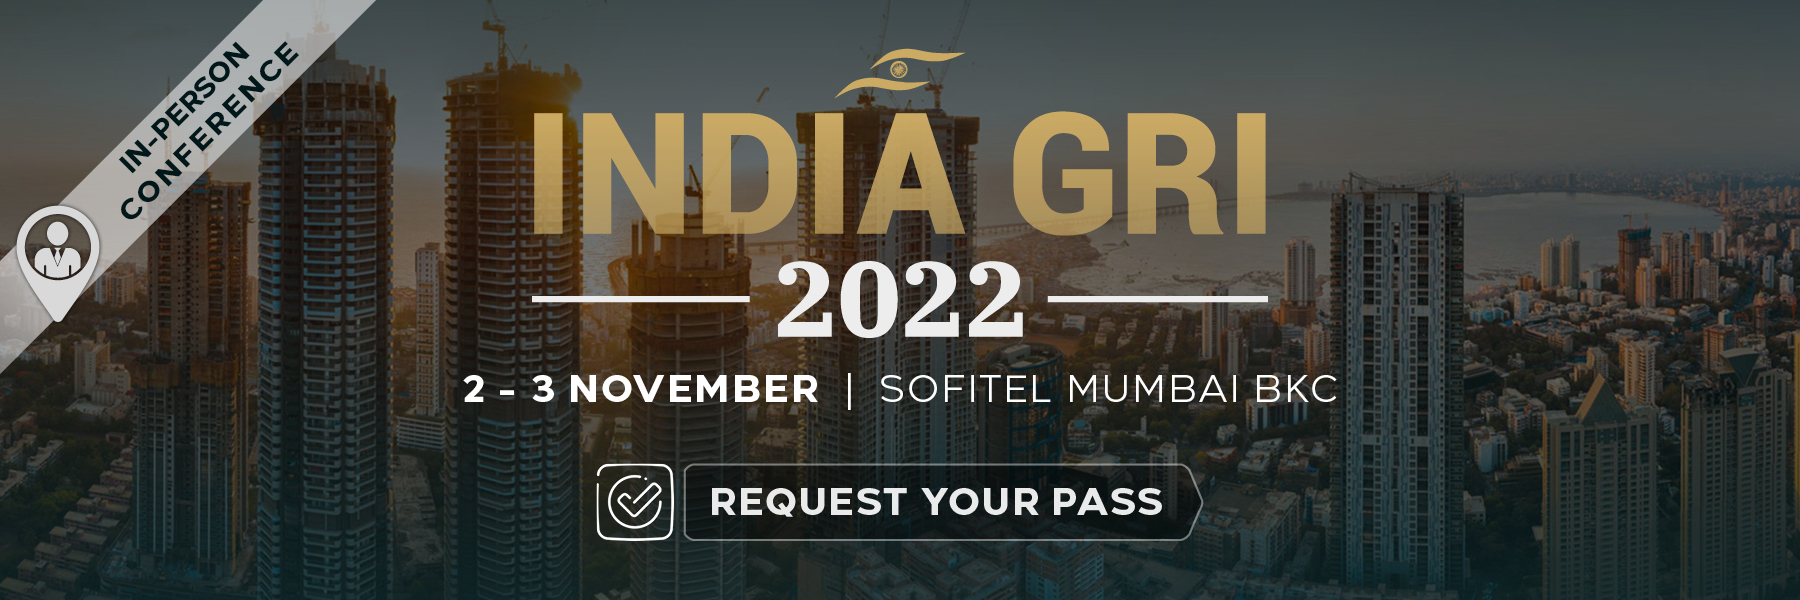 INDIA GRI 2022_BANNER_